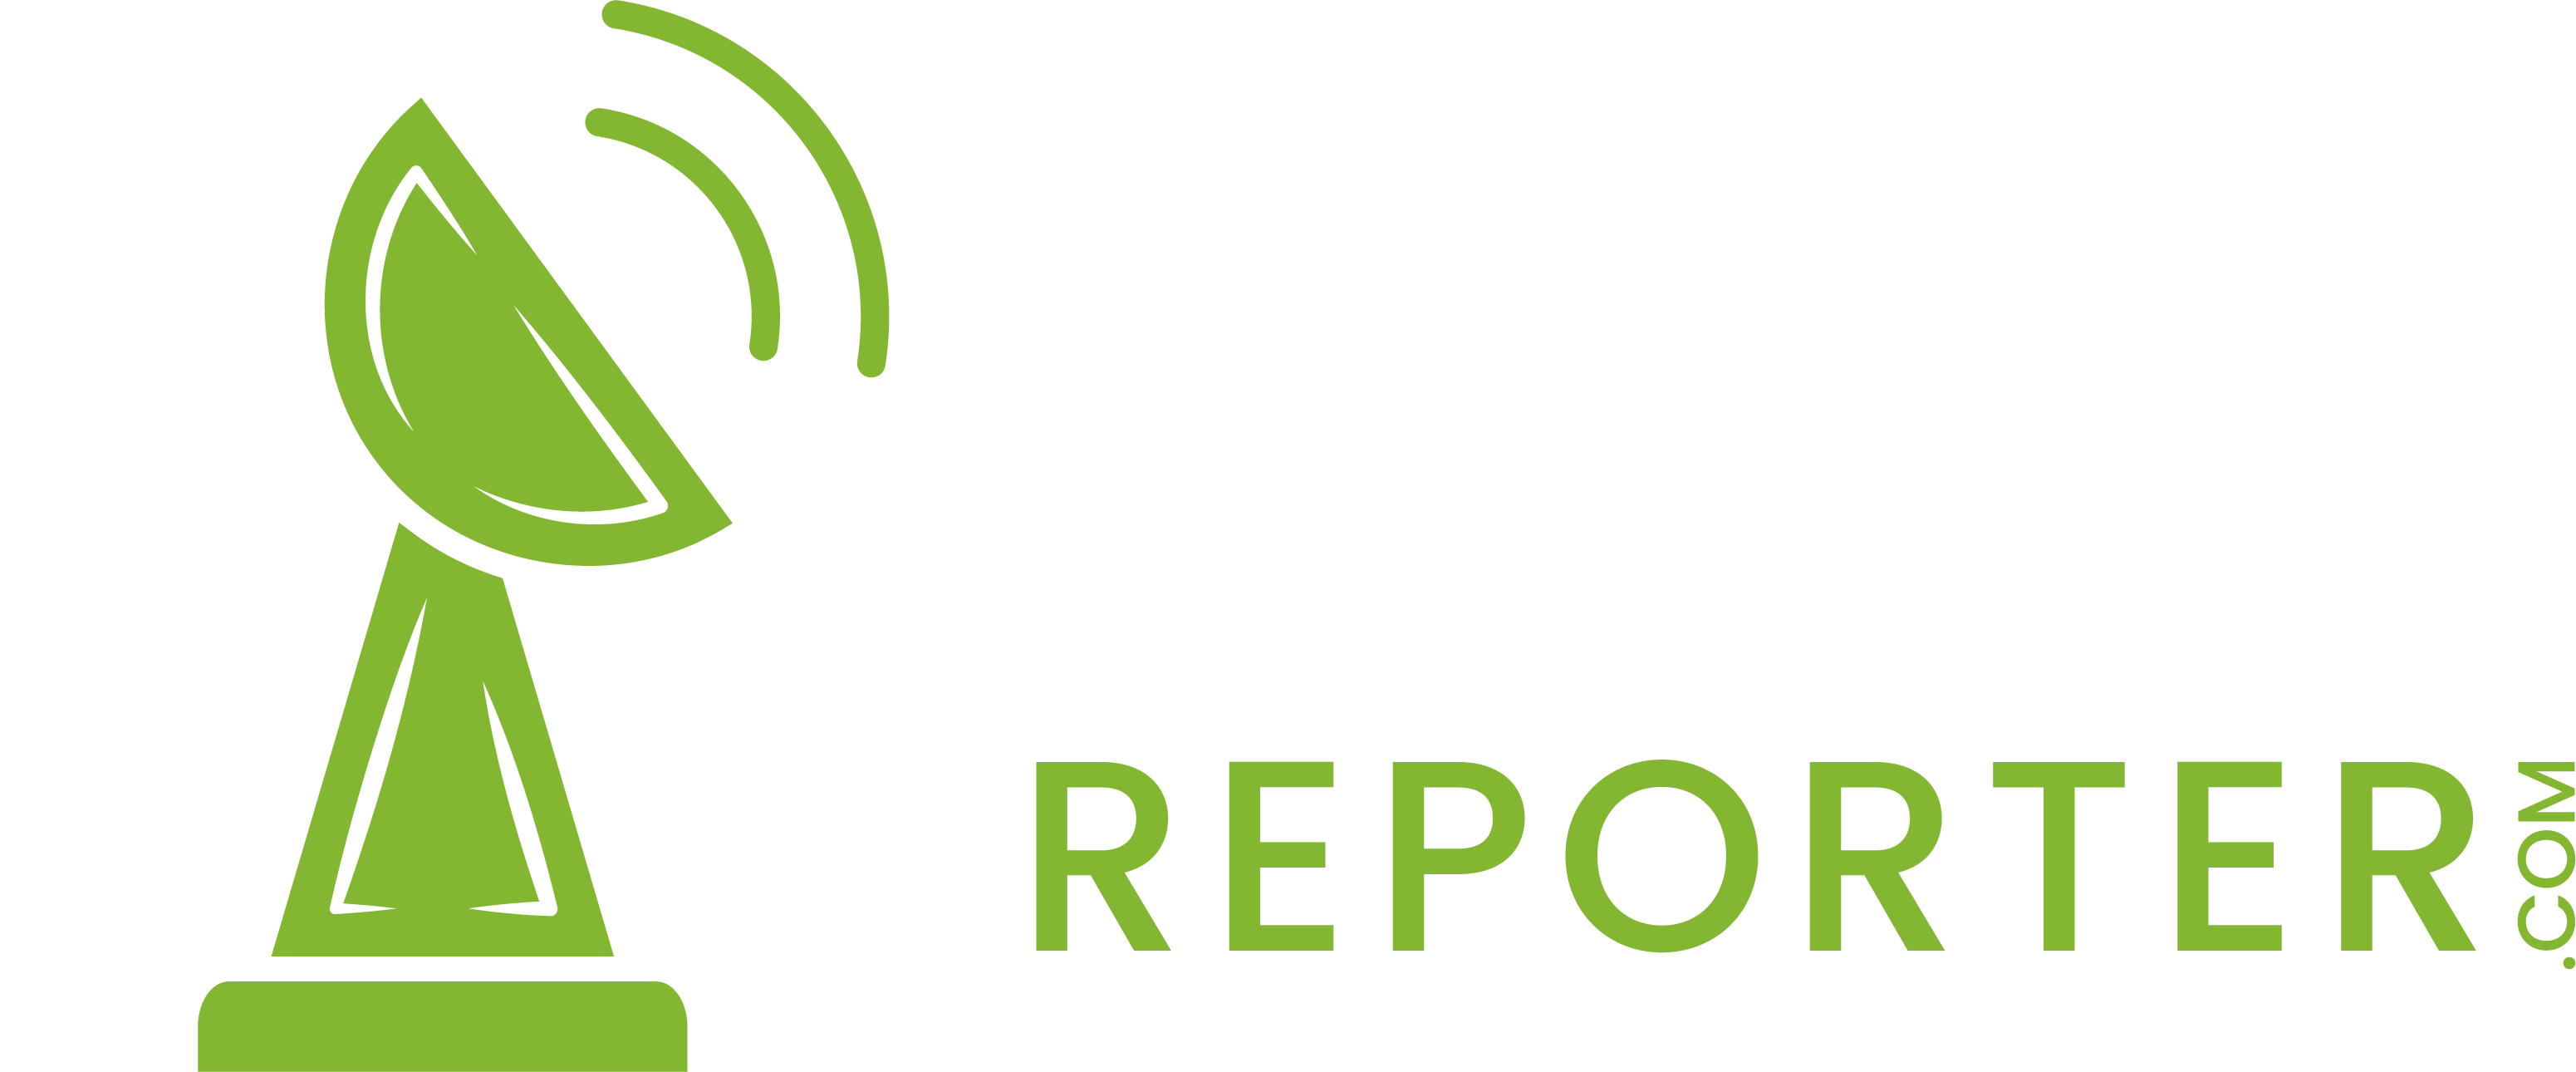 Ping Reporter